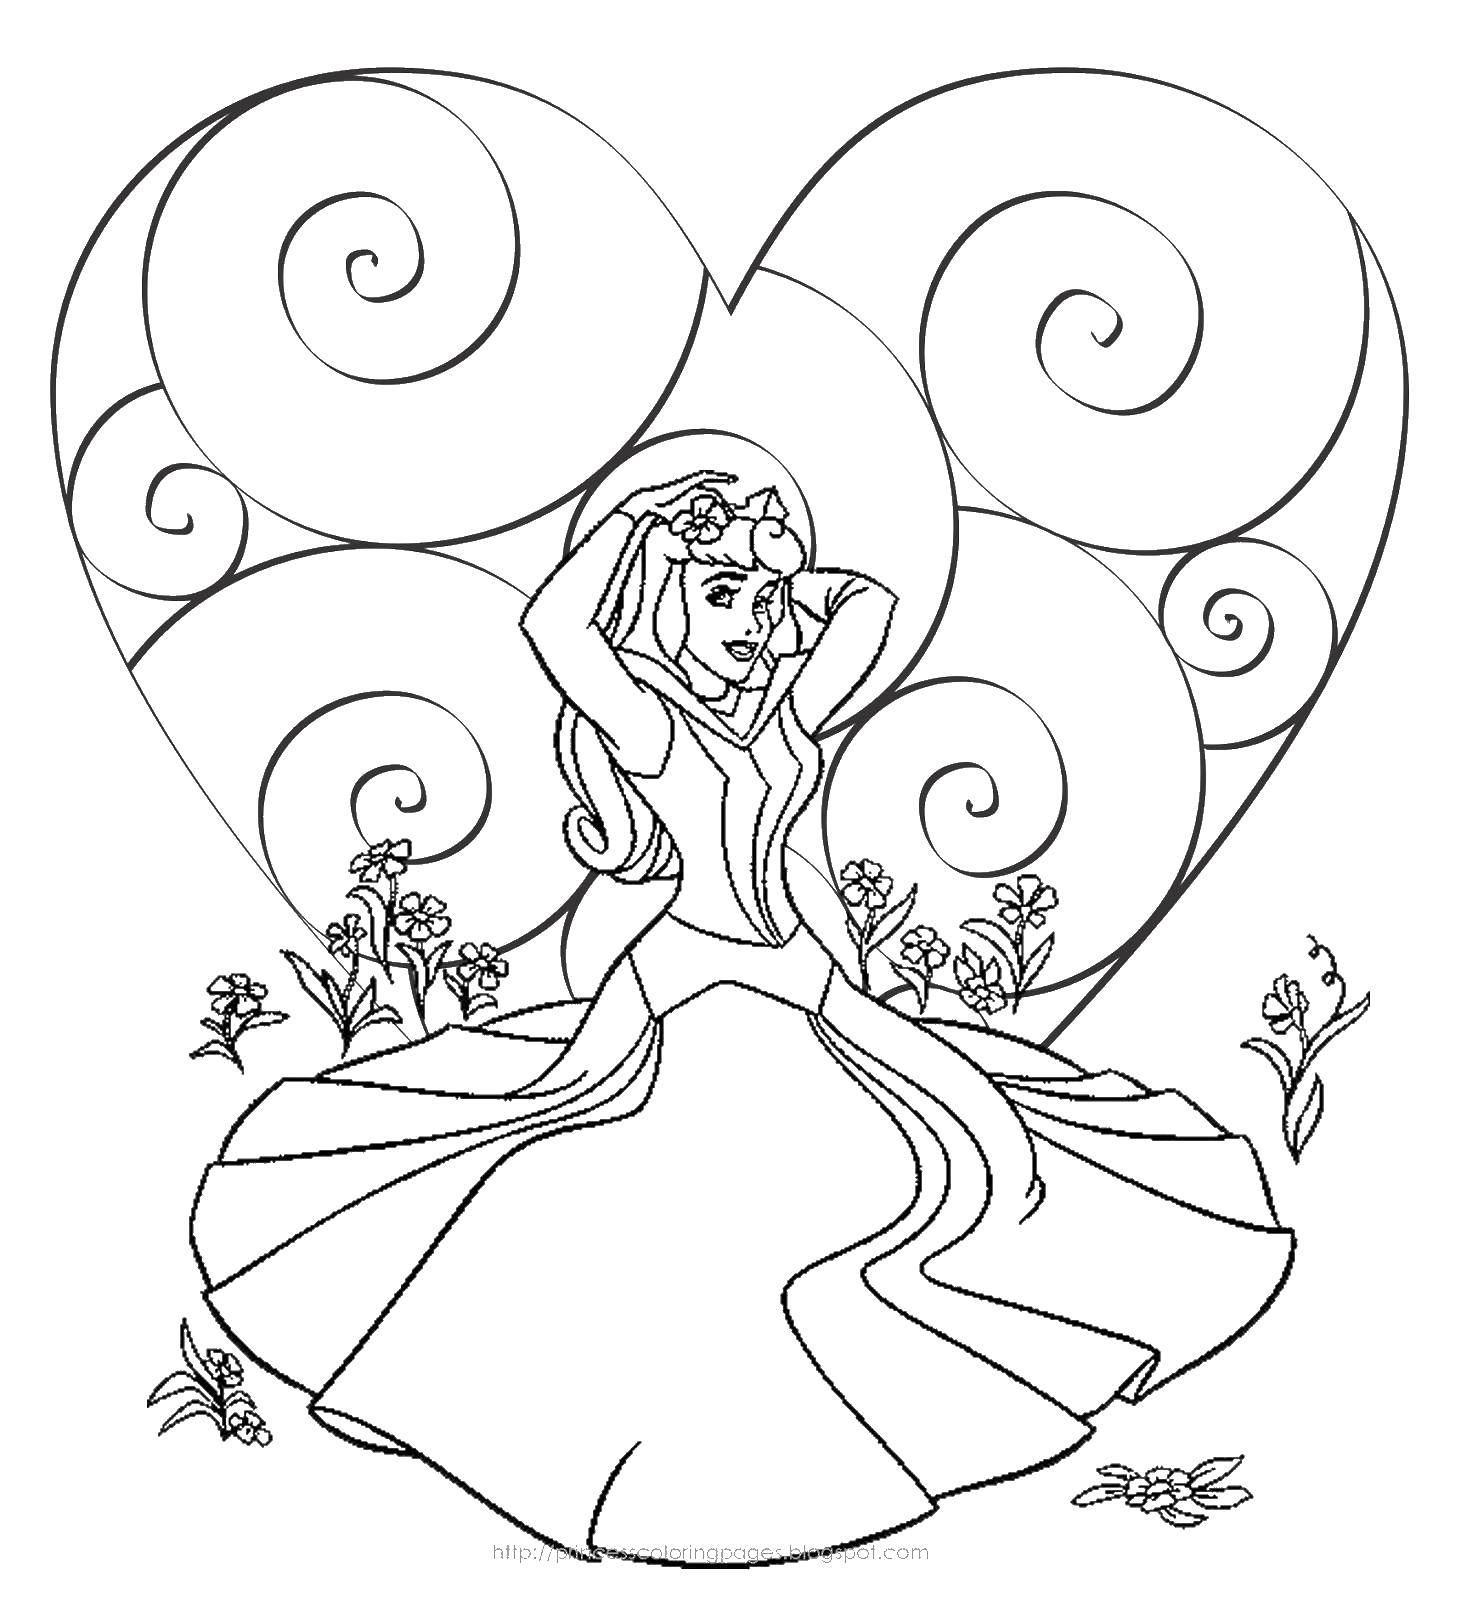 Coloring Aurora. Category Princess. Tags:  Princess Aurora, a heart, flowers.